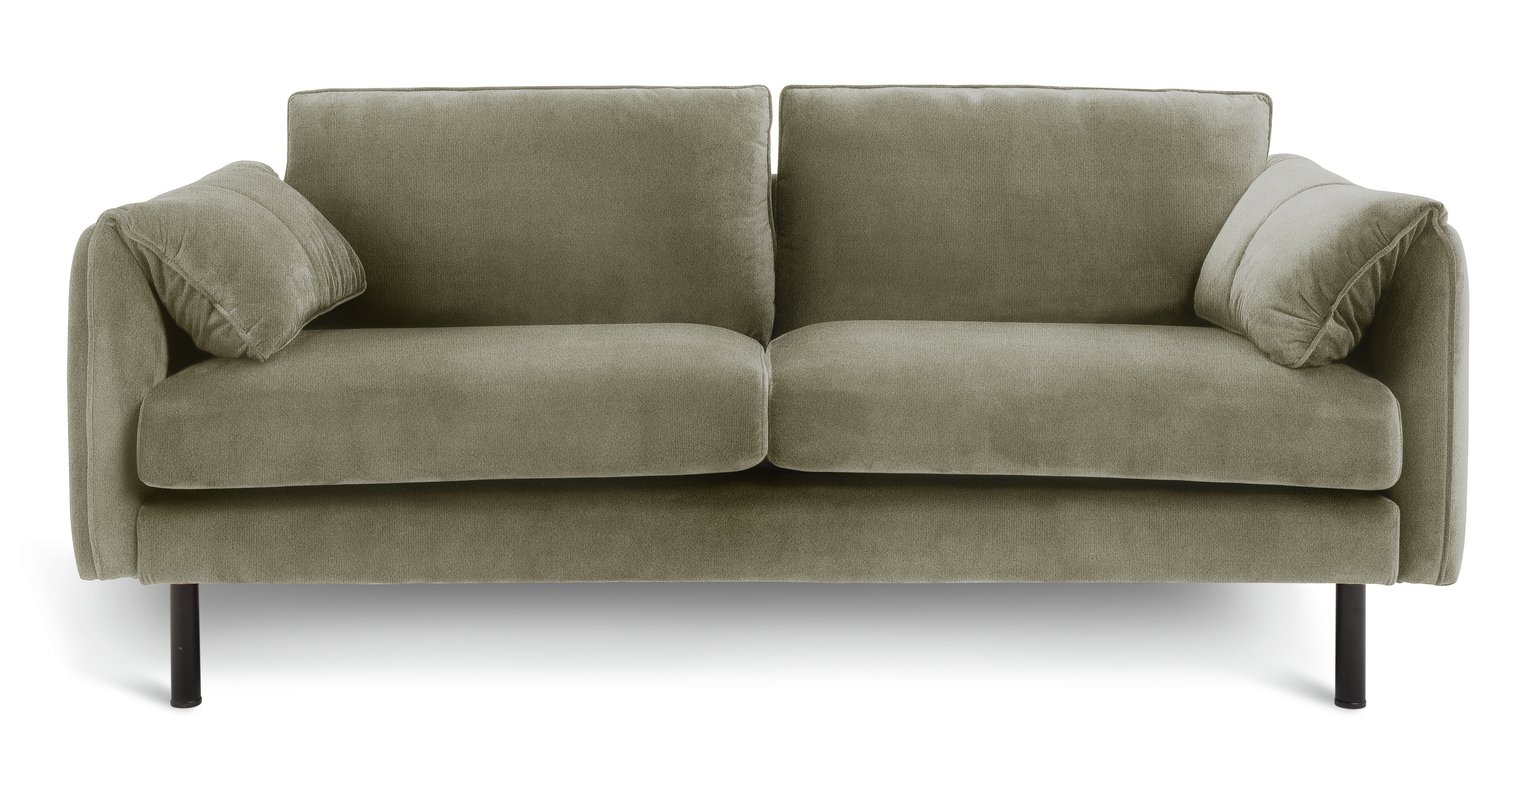 Habitat Bexley Fabric 3 Seater Sofa in a Box - Olive